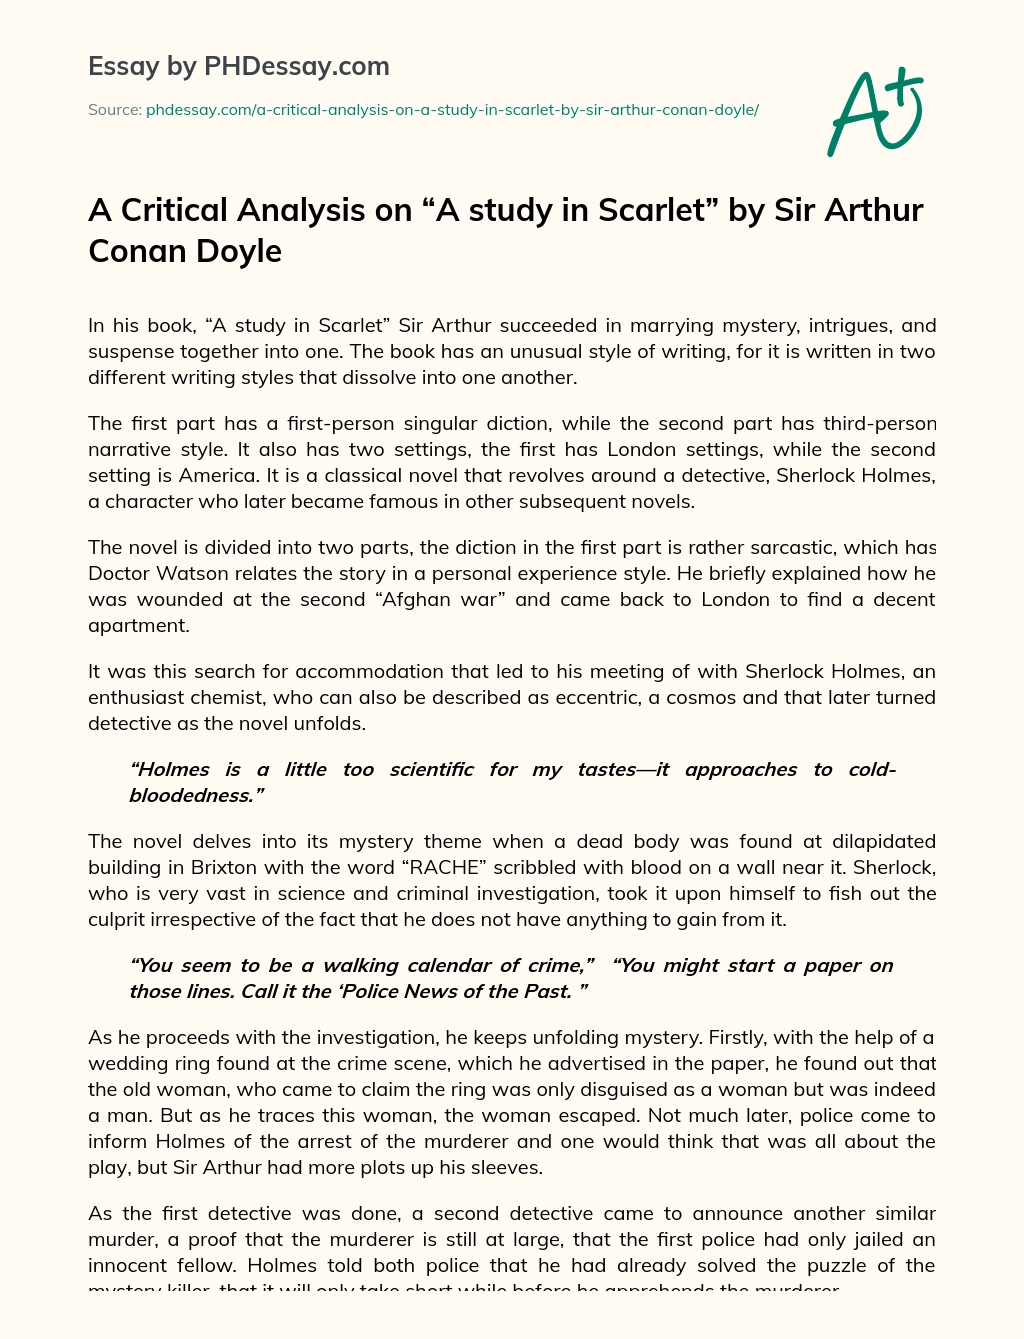 A Critical Analysis on “A study in Scarlet” by Sir Arthur Conan Doyle essay